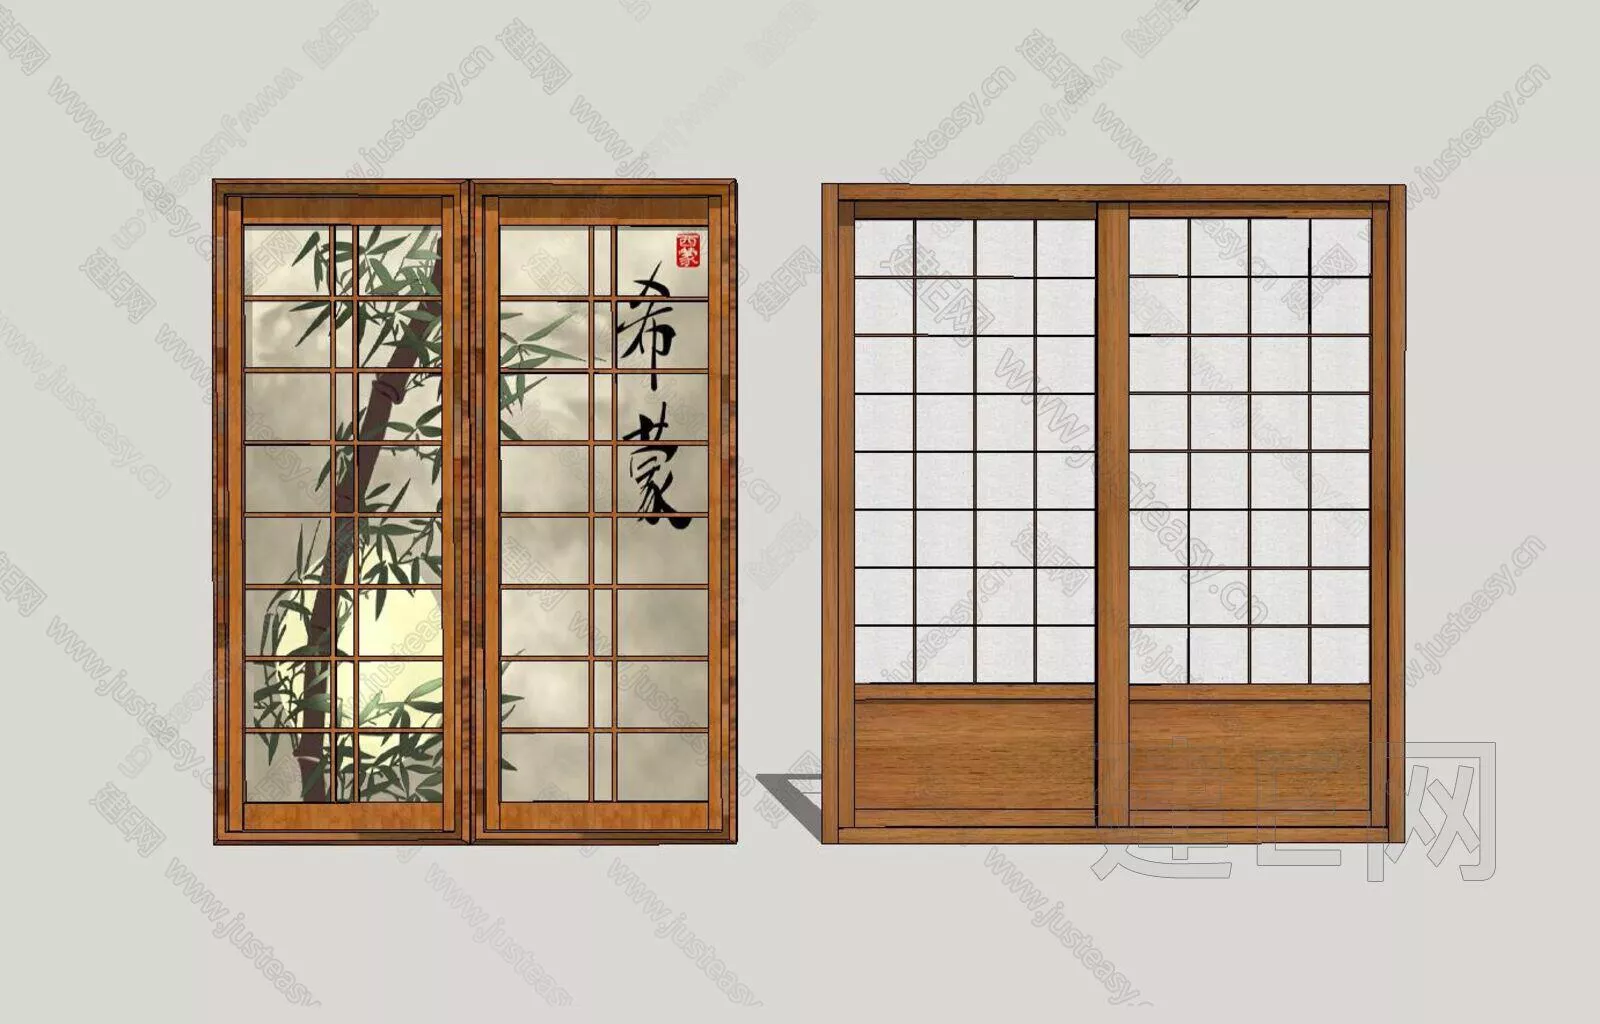 JAPANESE DOOR AND WINDOWS - SKETCHUP 3D MODEL - ENSCAPE - 105726202